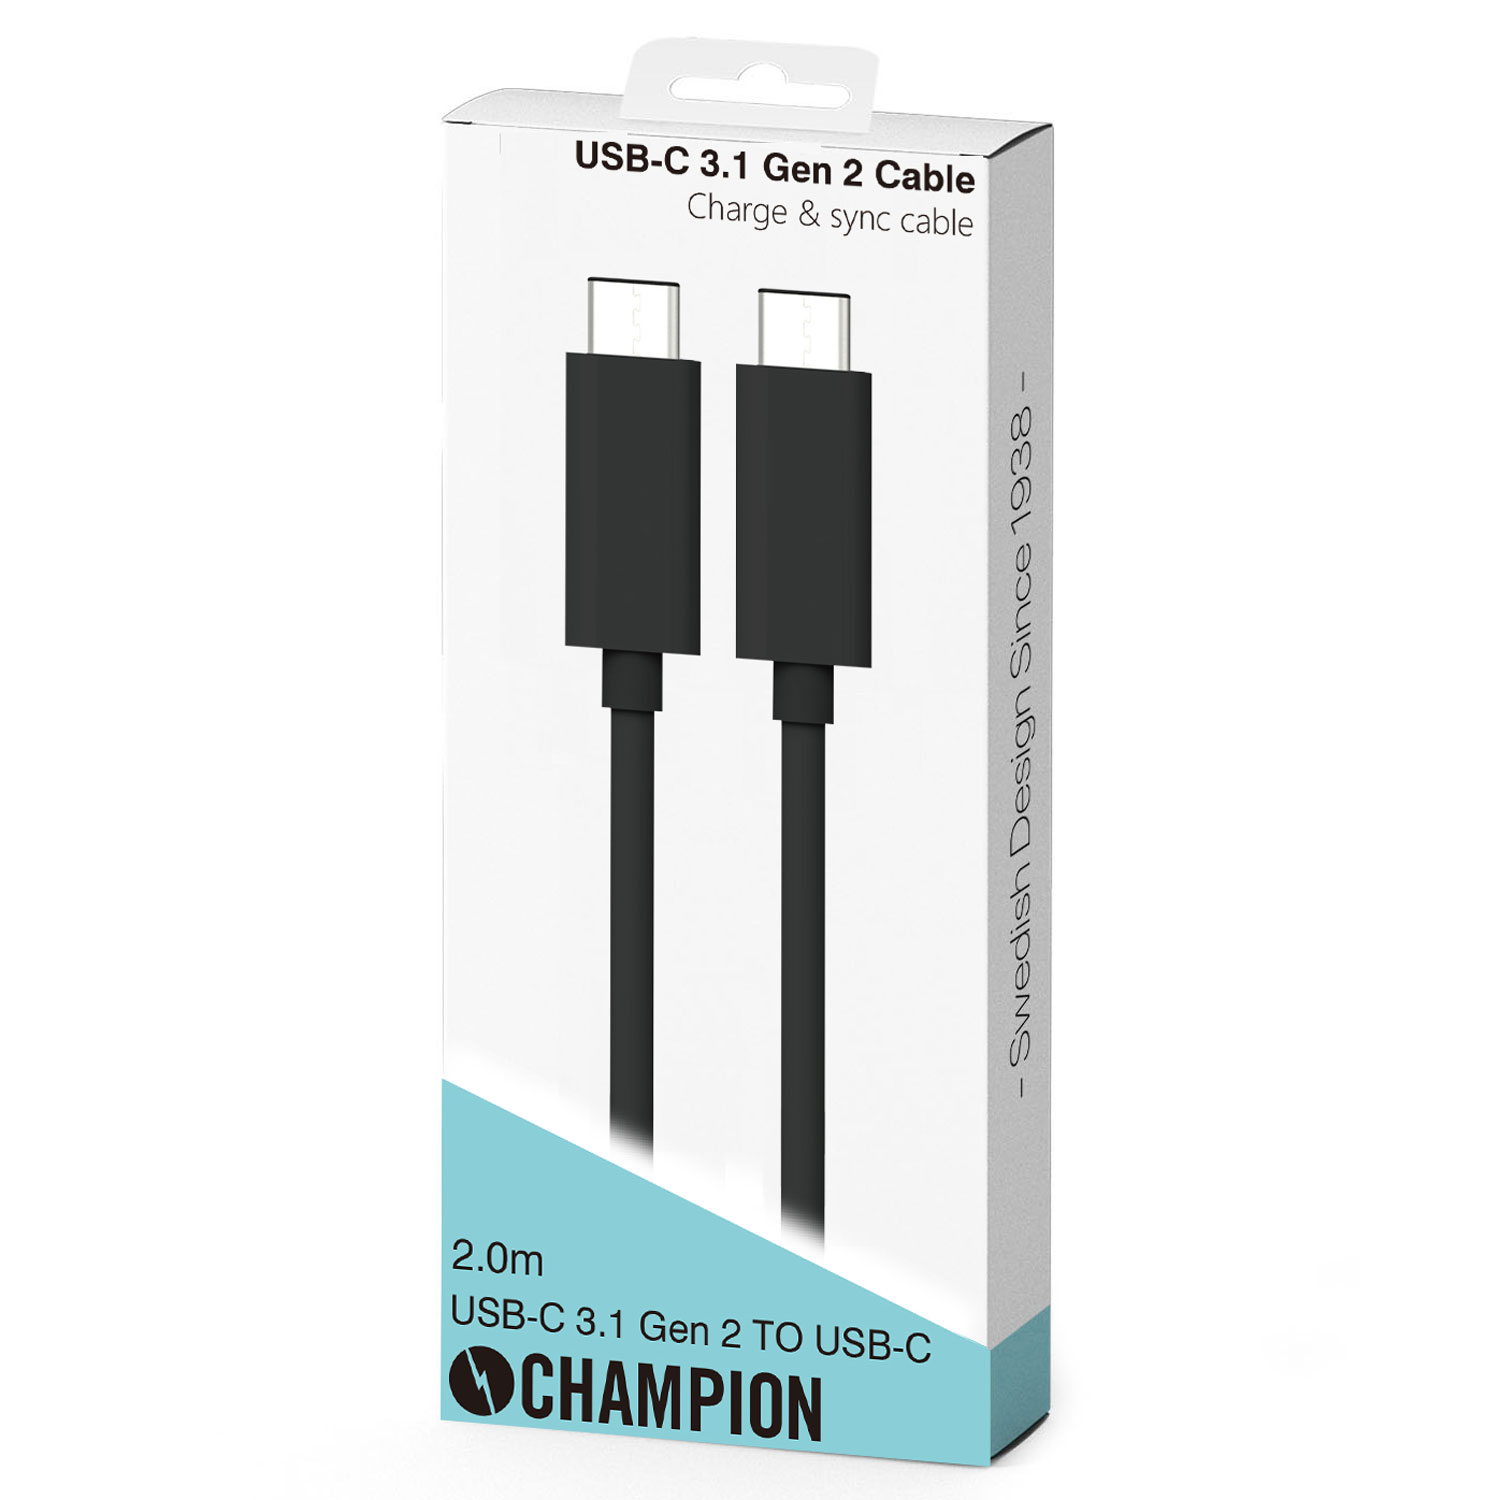 C, m C 3.1 2 Kabale - USB-C USB CHAMPION Gen2